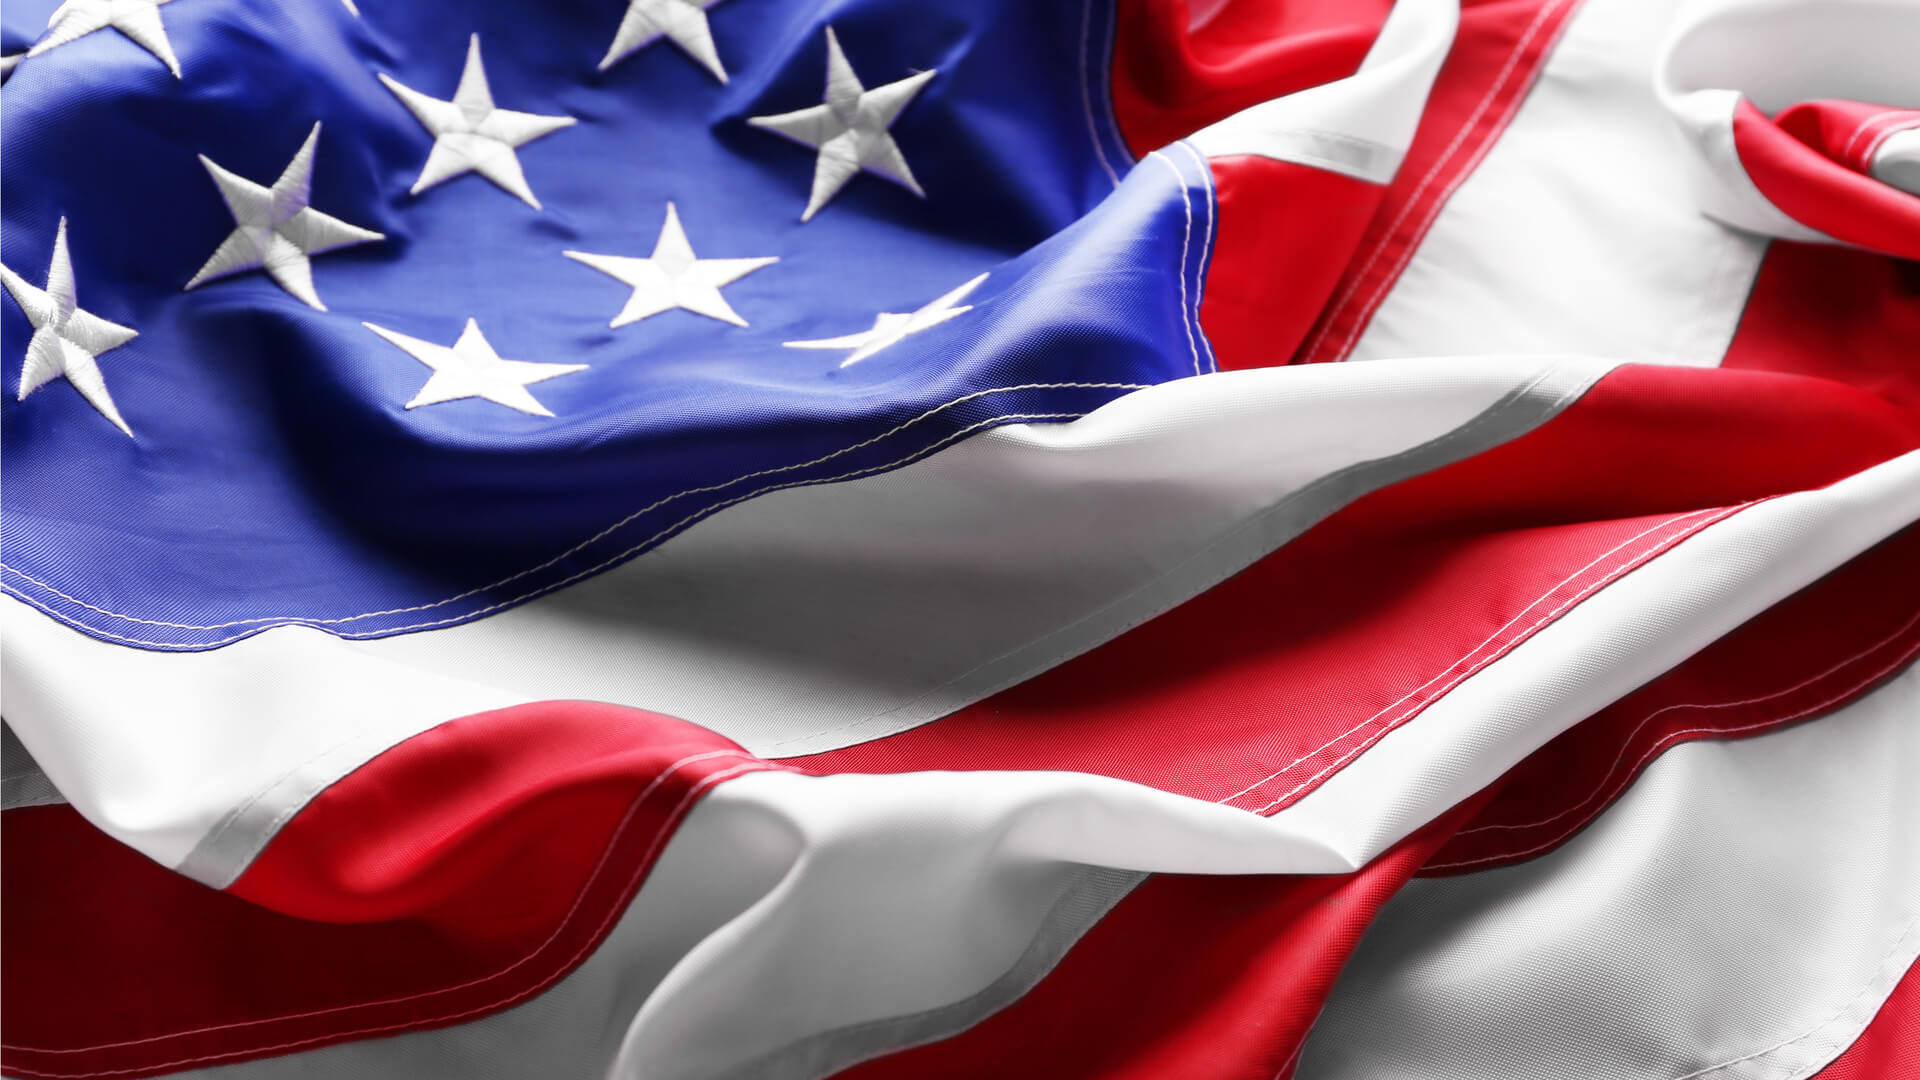 america-united-states-us-flag-images-2017